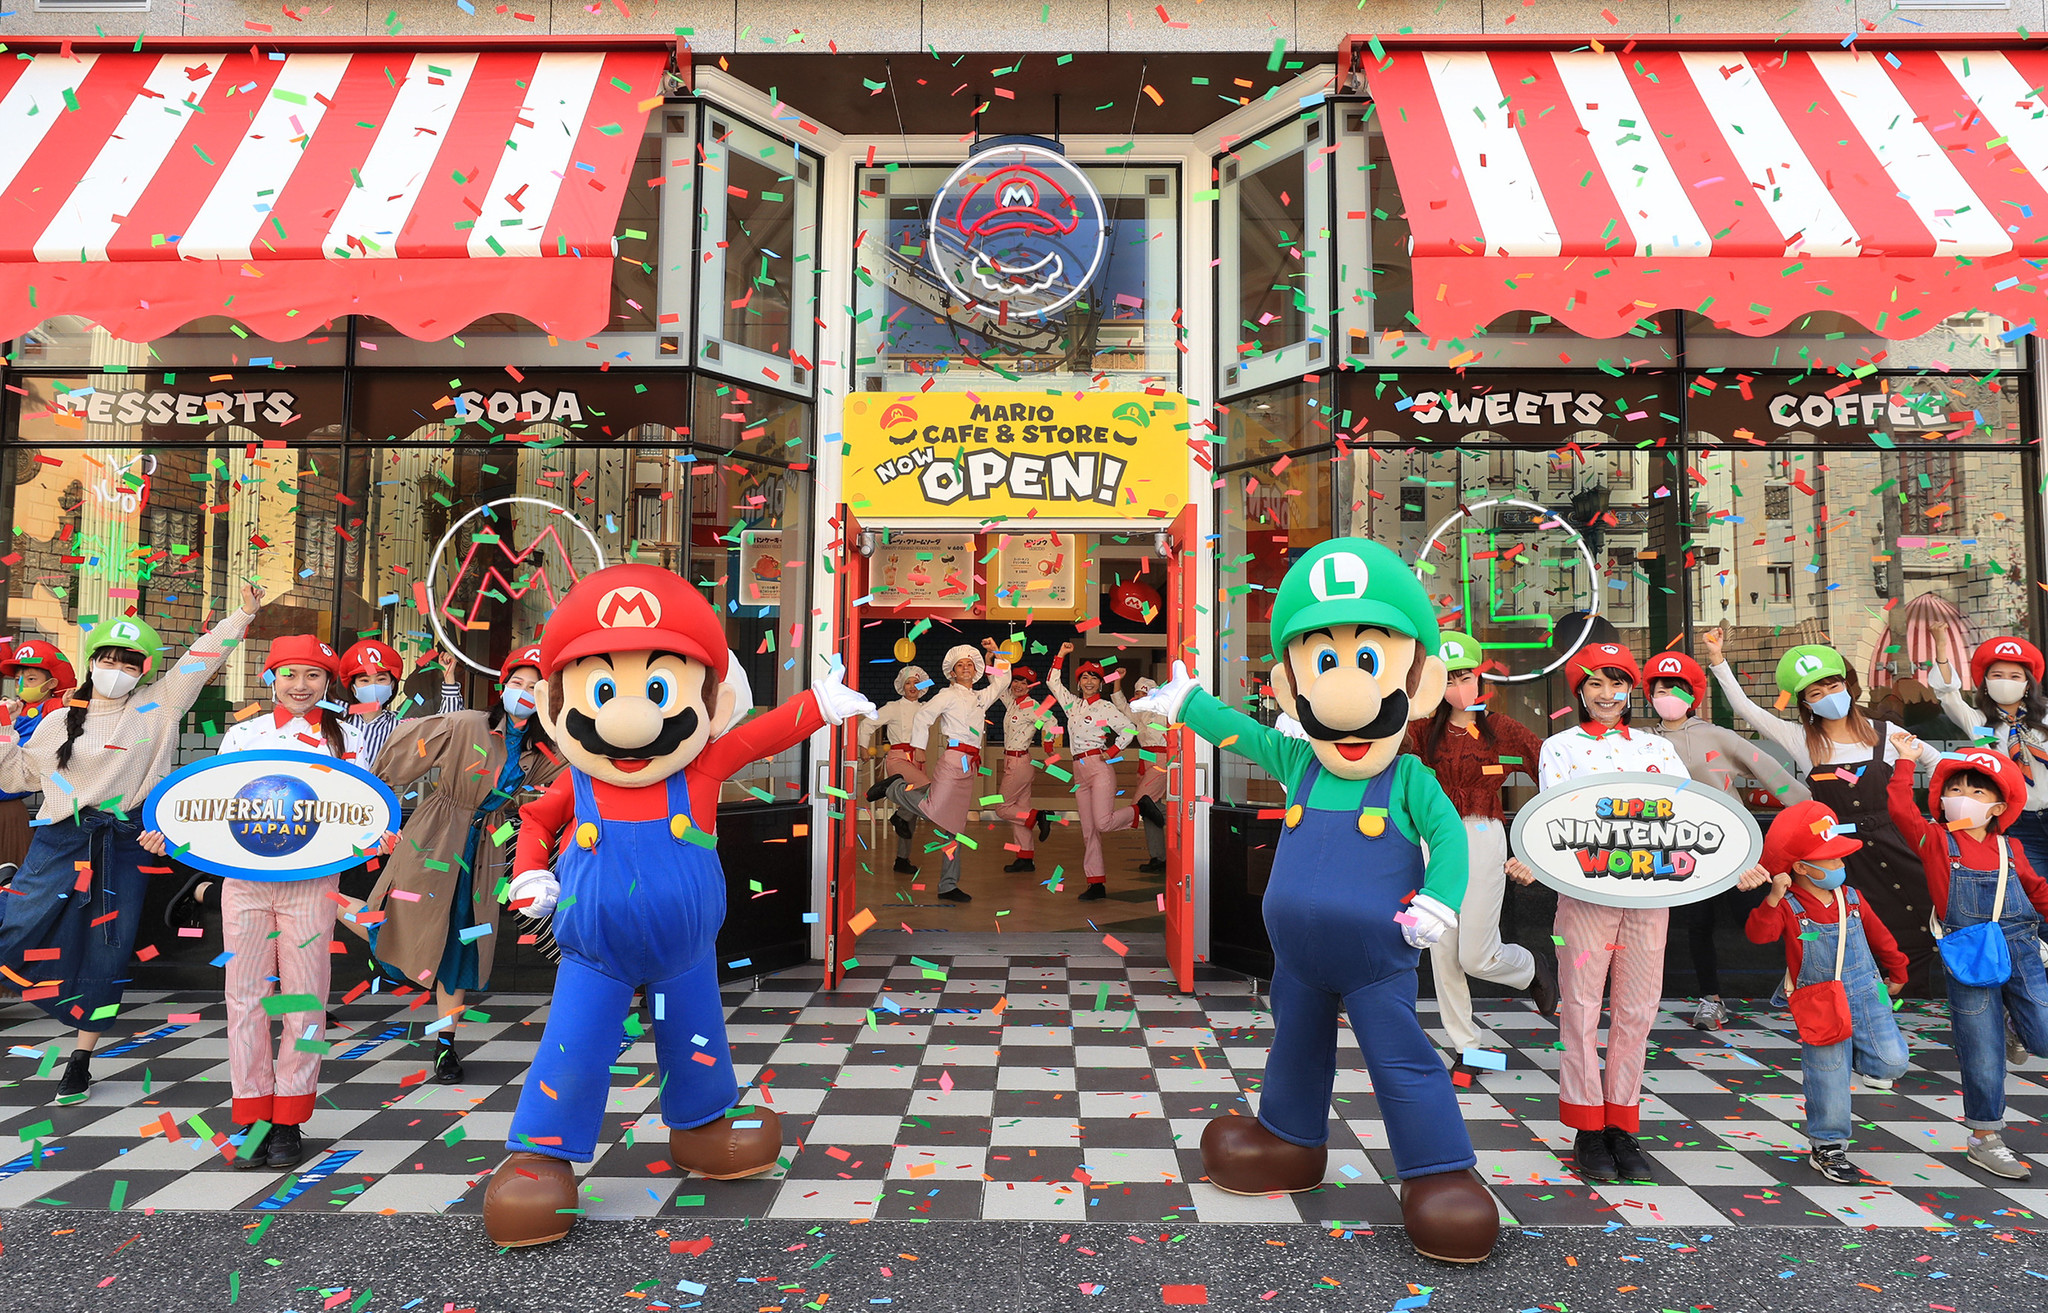 Mario Café & Store opens at Universal Studios Japan | Inside Universal